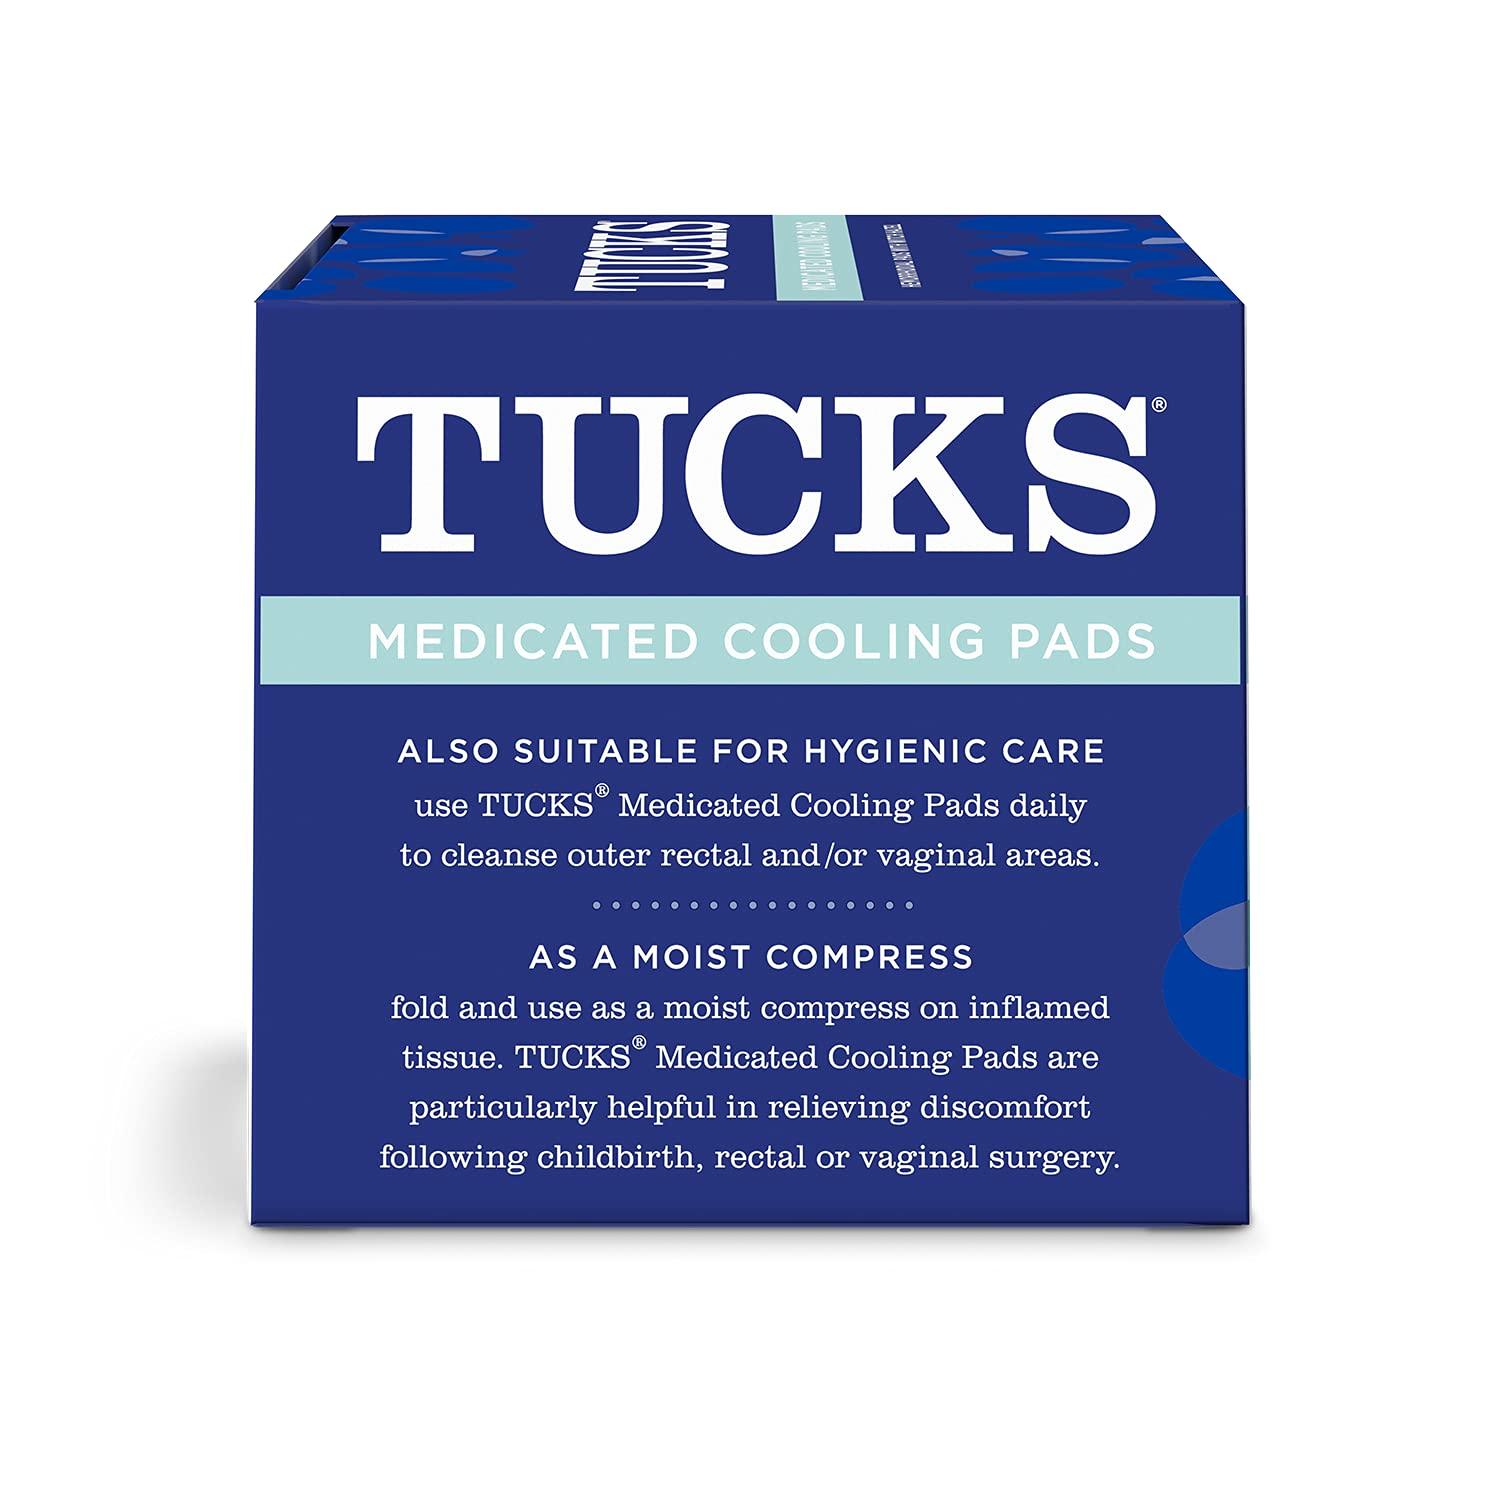 Tucks® Multi-Care Relief Kit (Tucks® Hemorrhoidal Cream and Tucks®  Medicated Cooling Pads 40 Count)